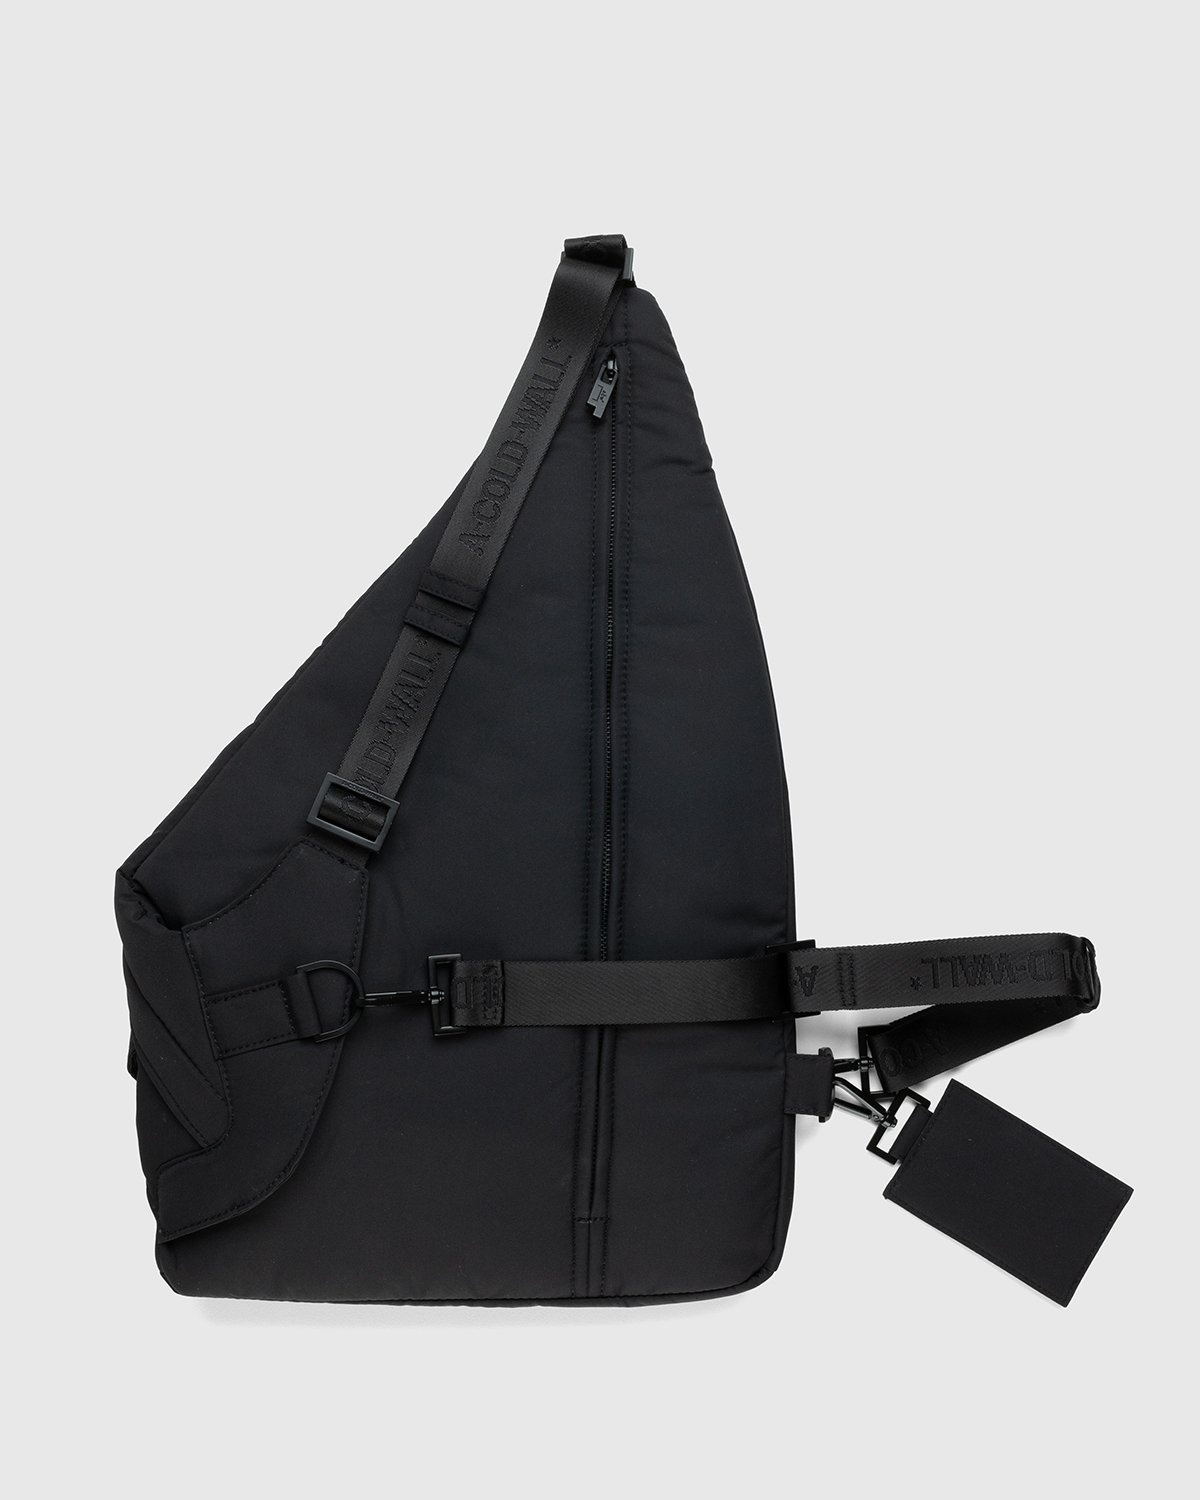 A-Cold-Wall* – Semi Gilet Body Bag Black - Shoulder Bags - Black - Image 2